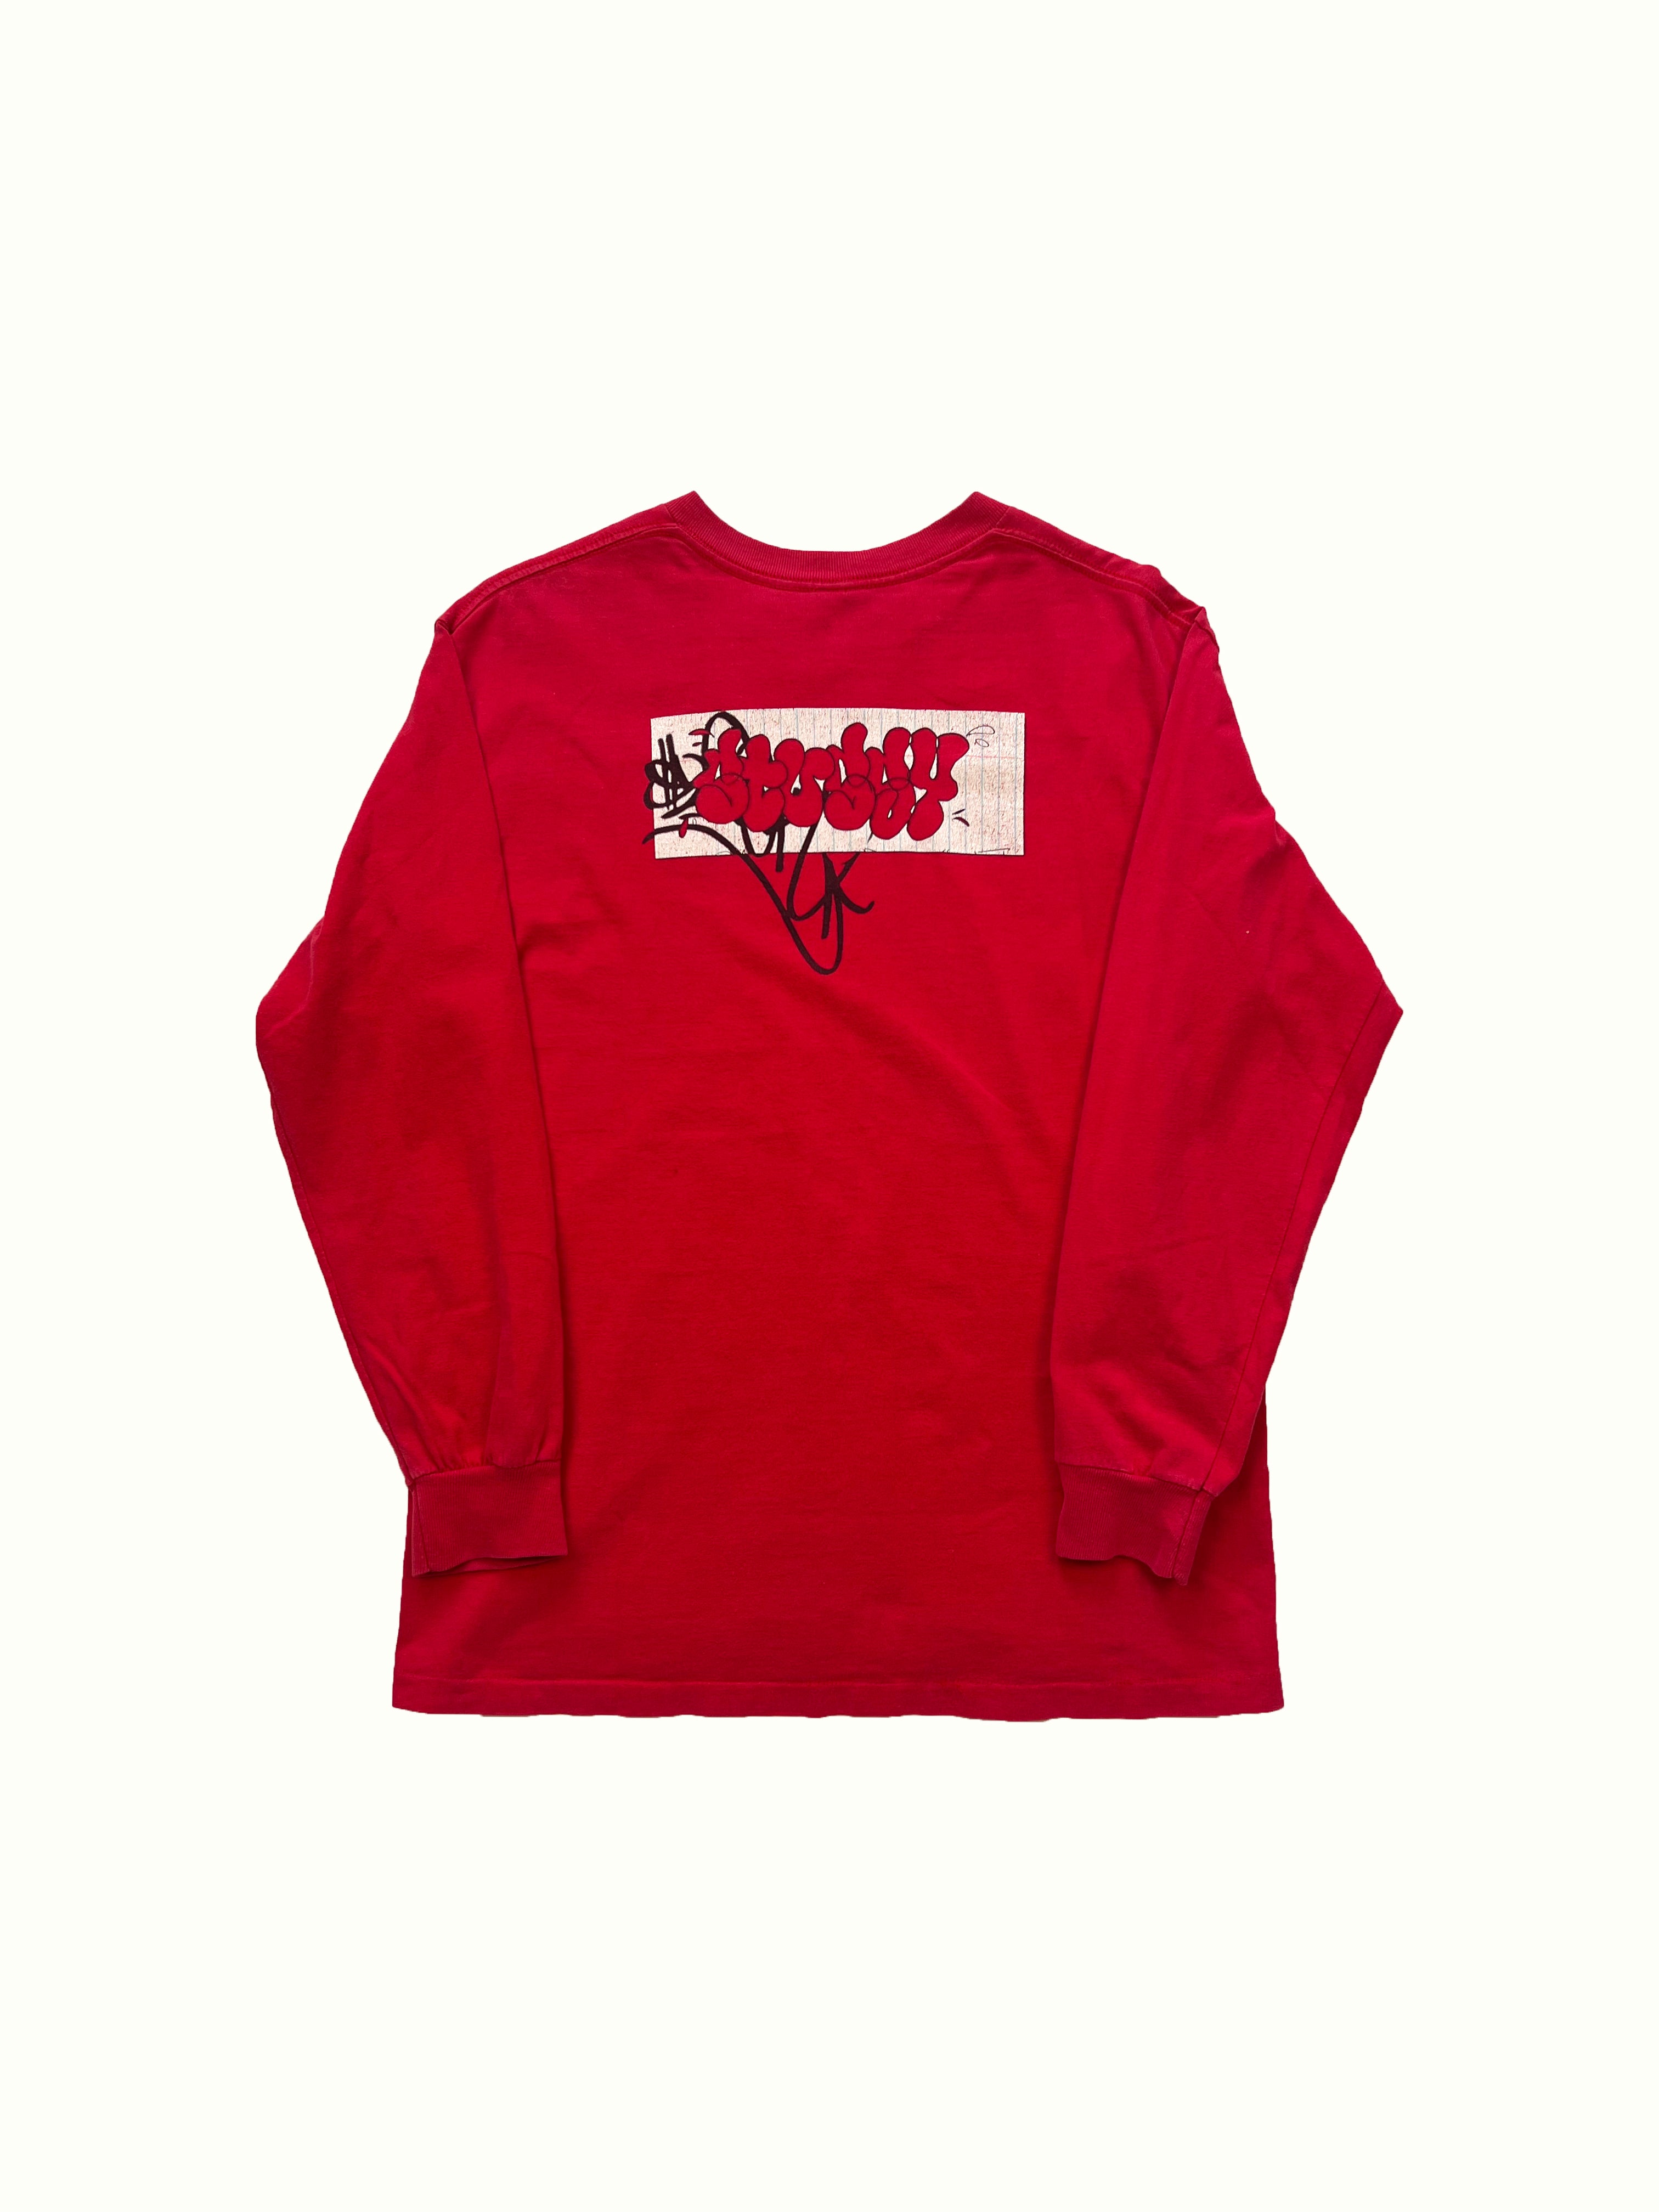 Stussy Graffiti Red Long Sleeve T-shirt 90's